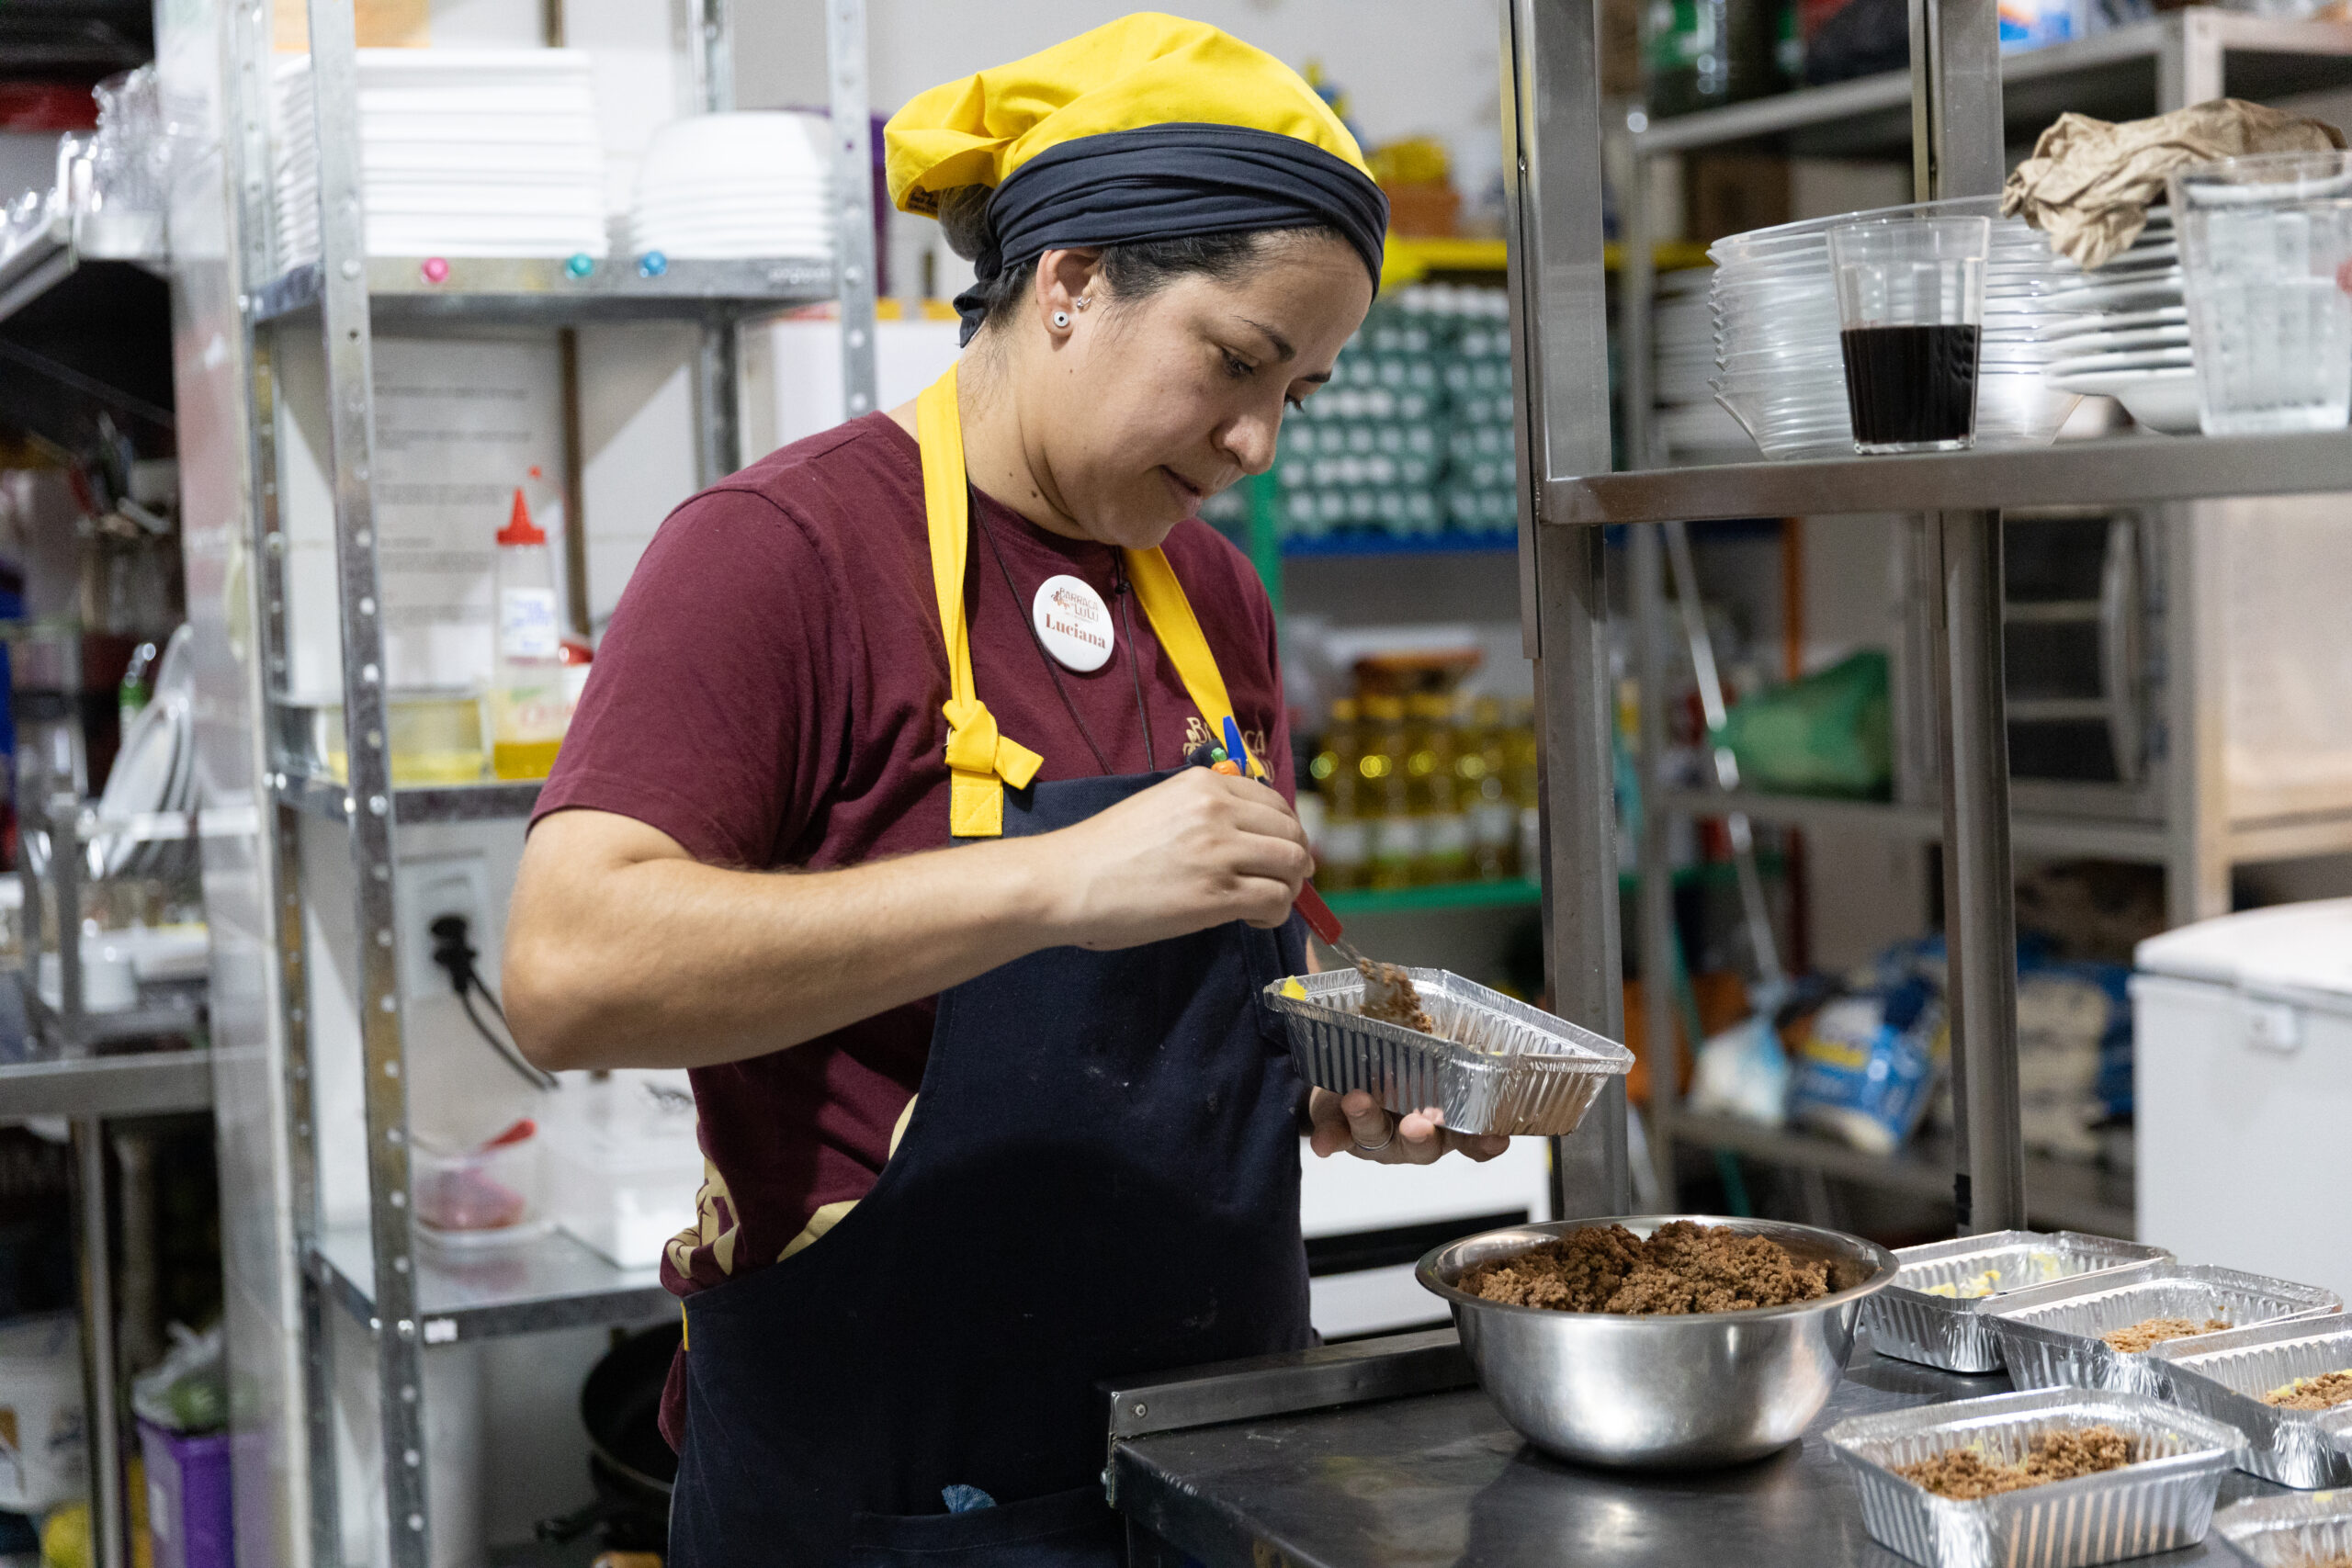 Luciana serves food in her restaurant in Brazil